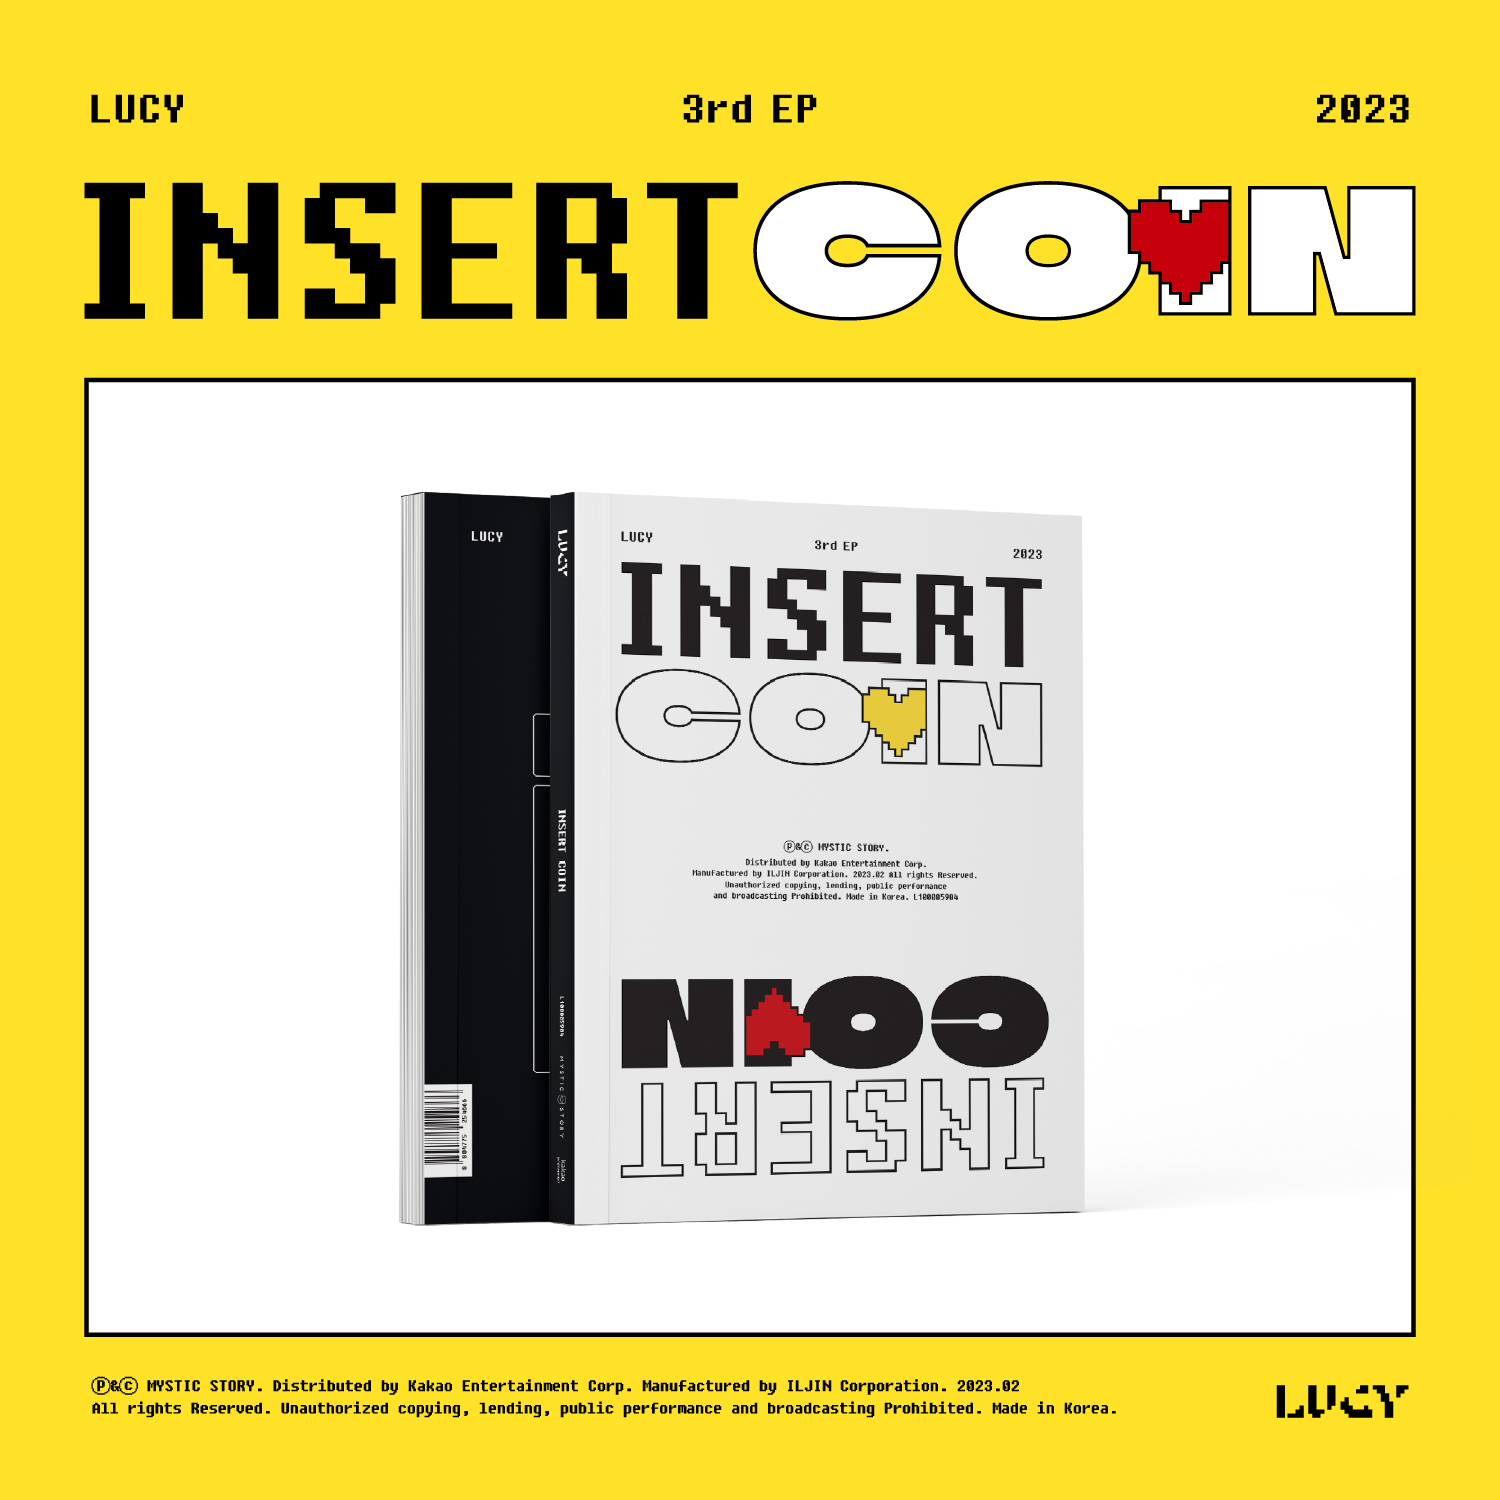 [全款 裸专] LUCY - EP专辑 3辑 [Insert Coin] _LUCYvillage_鲁西犬舍